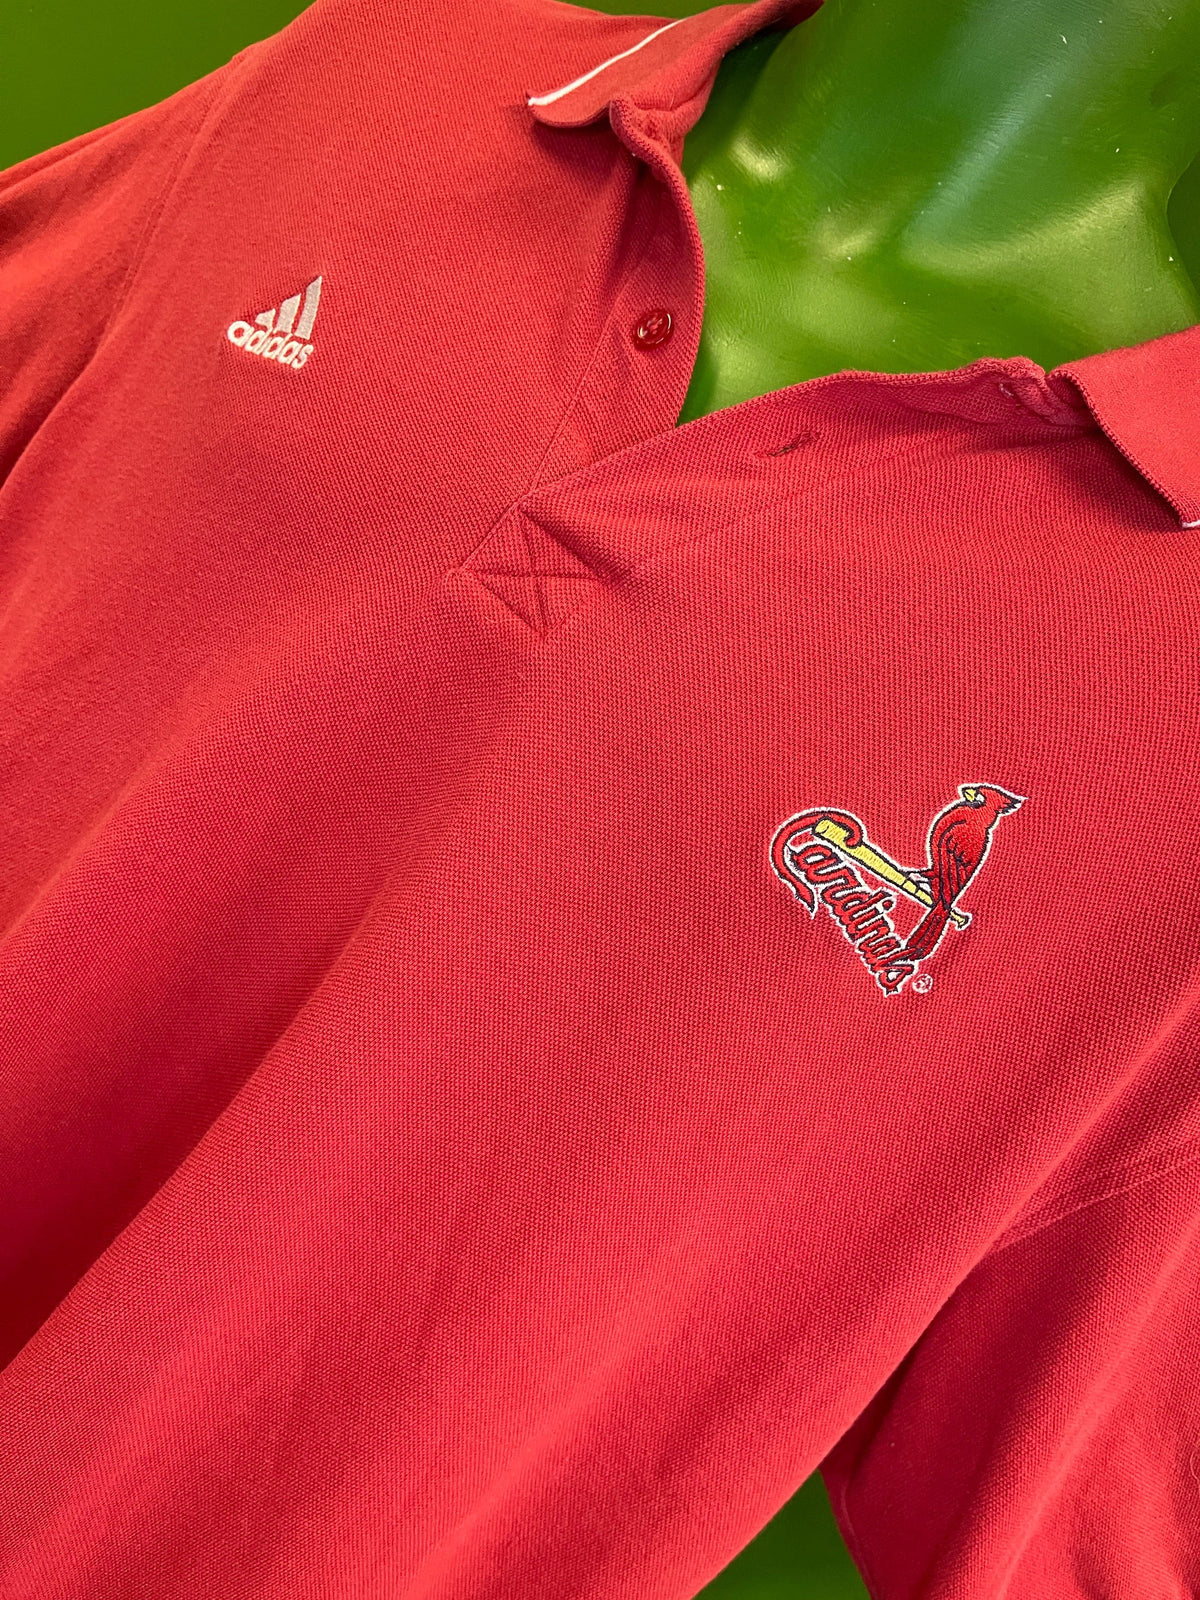 MLB St. Louis Cardinals Red Golf Polo Shirt Men's X-Large